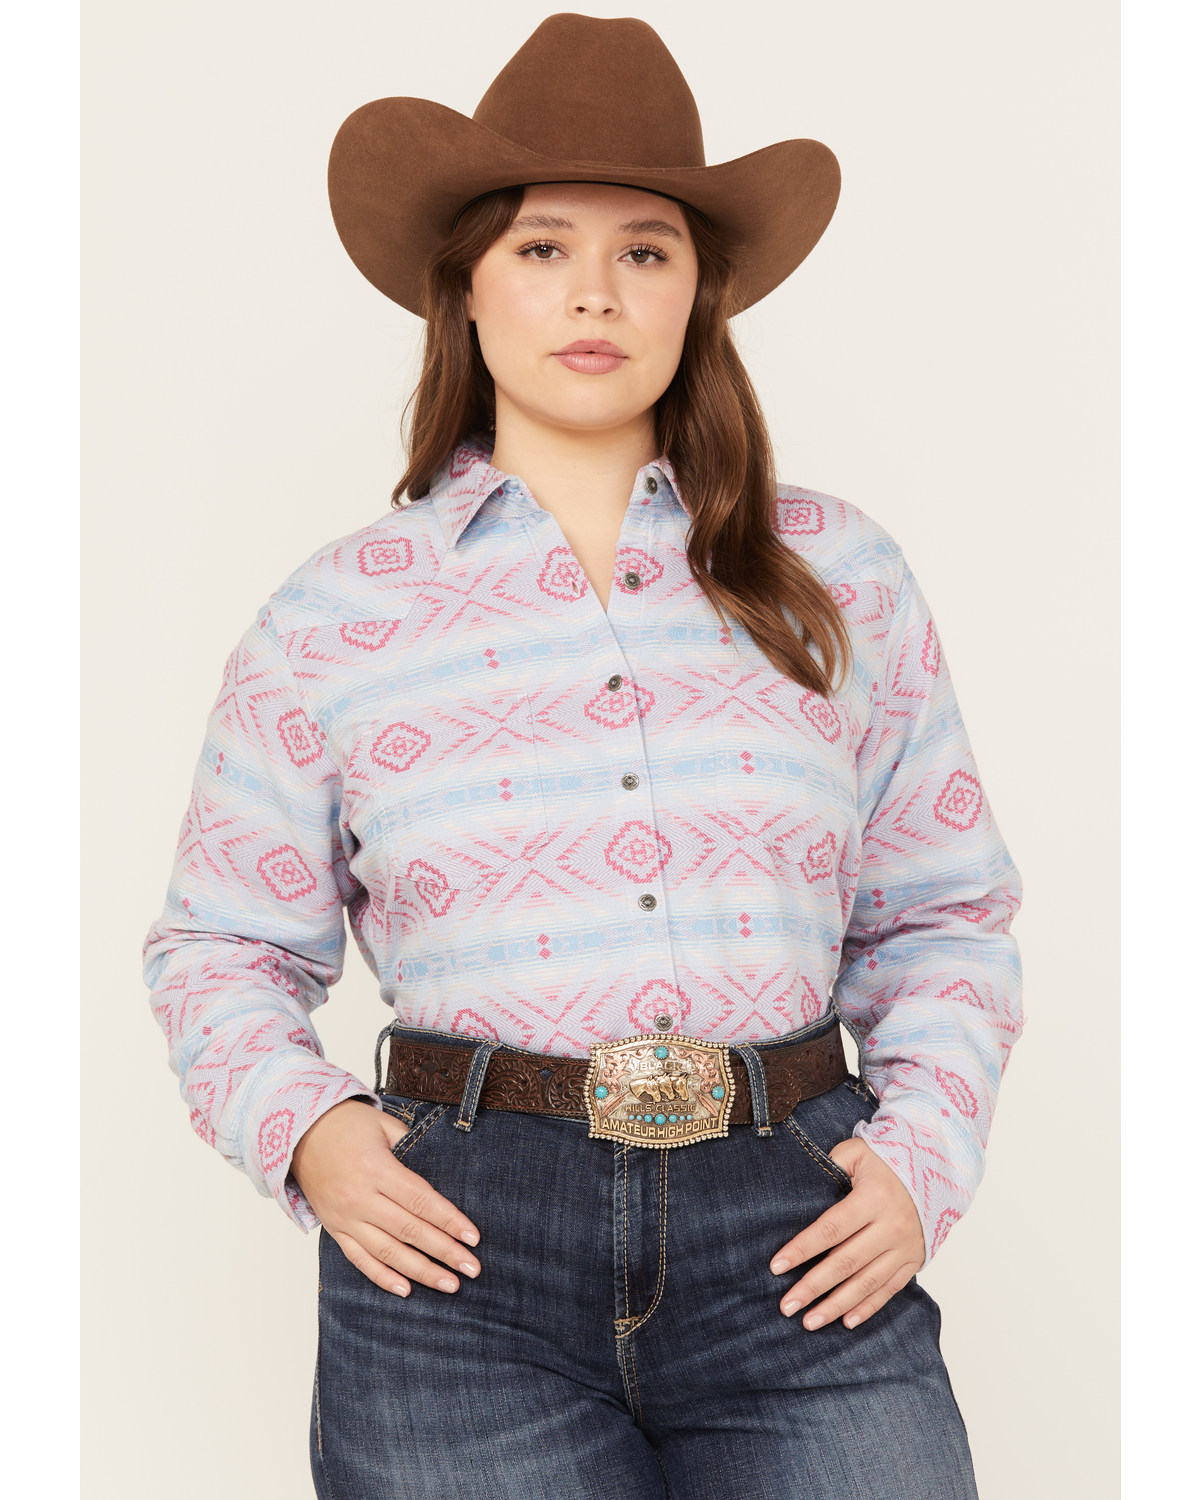 Ariat Women's R.E.A.L Billie Jean Southwestern Print Shirt - Plus